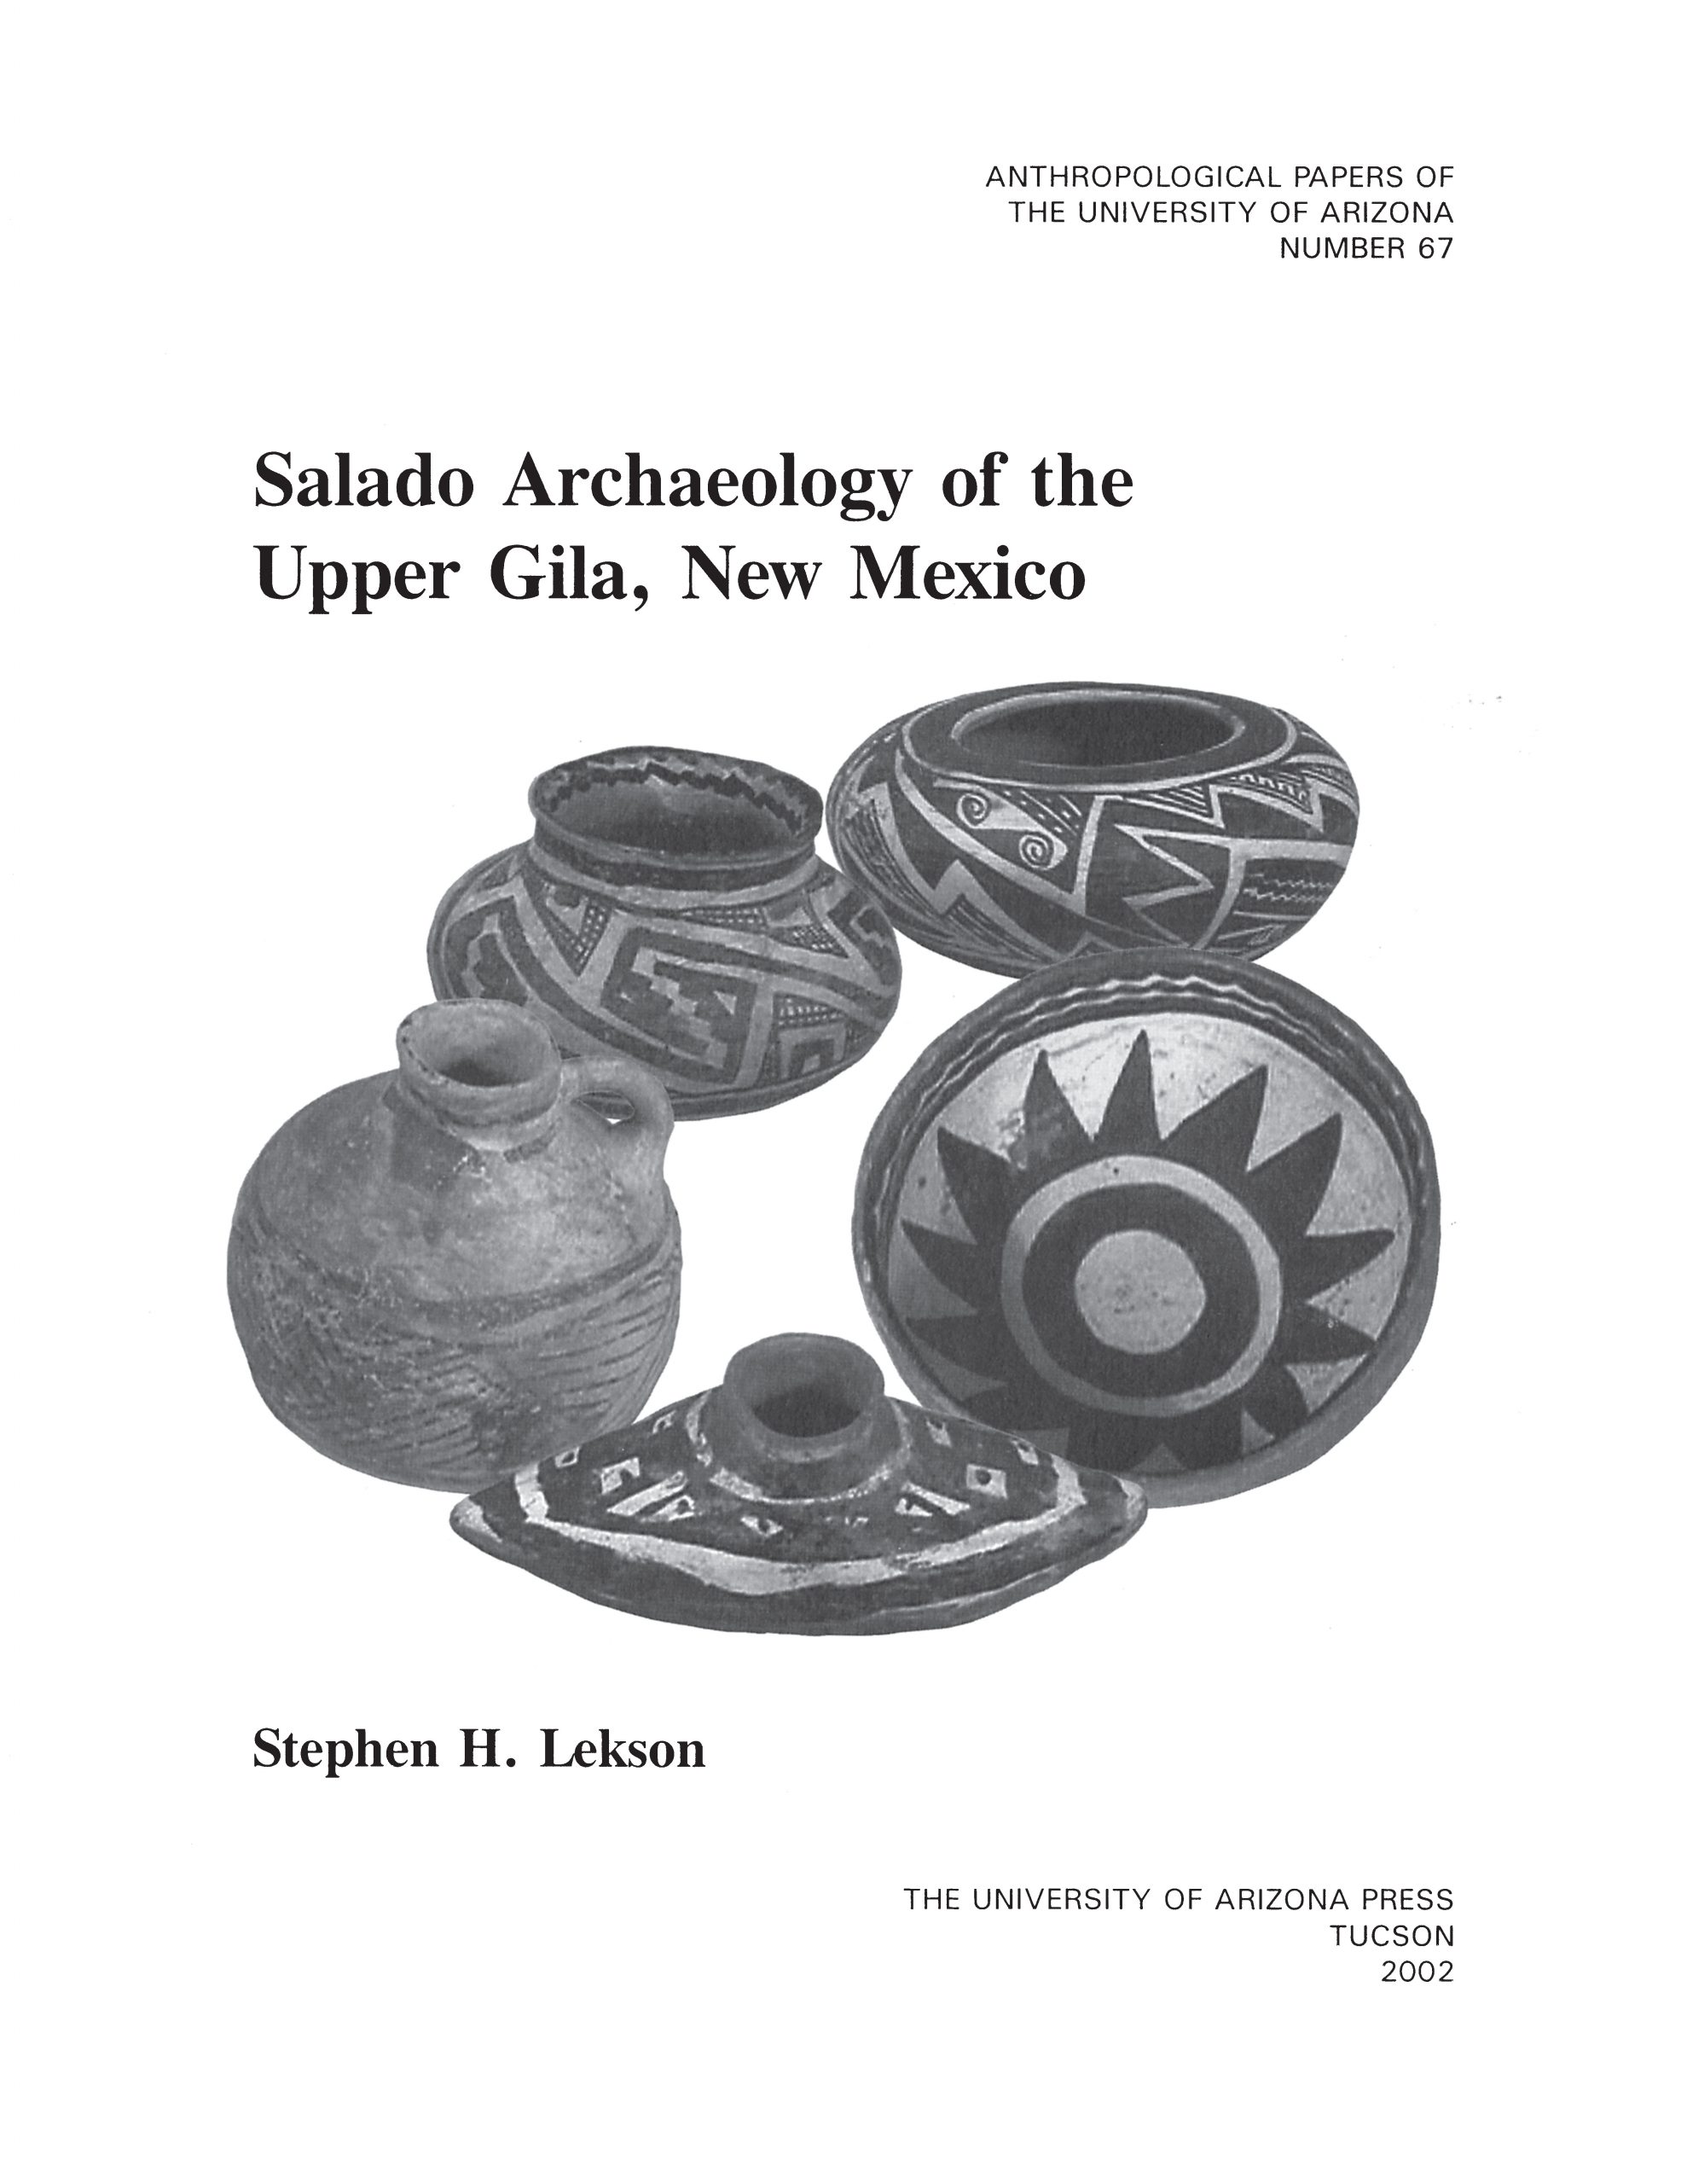 Salado Archaeology of the Upper Gila, New Mexico